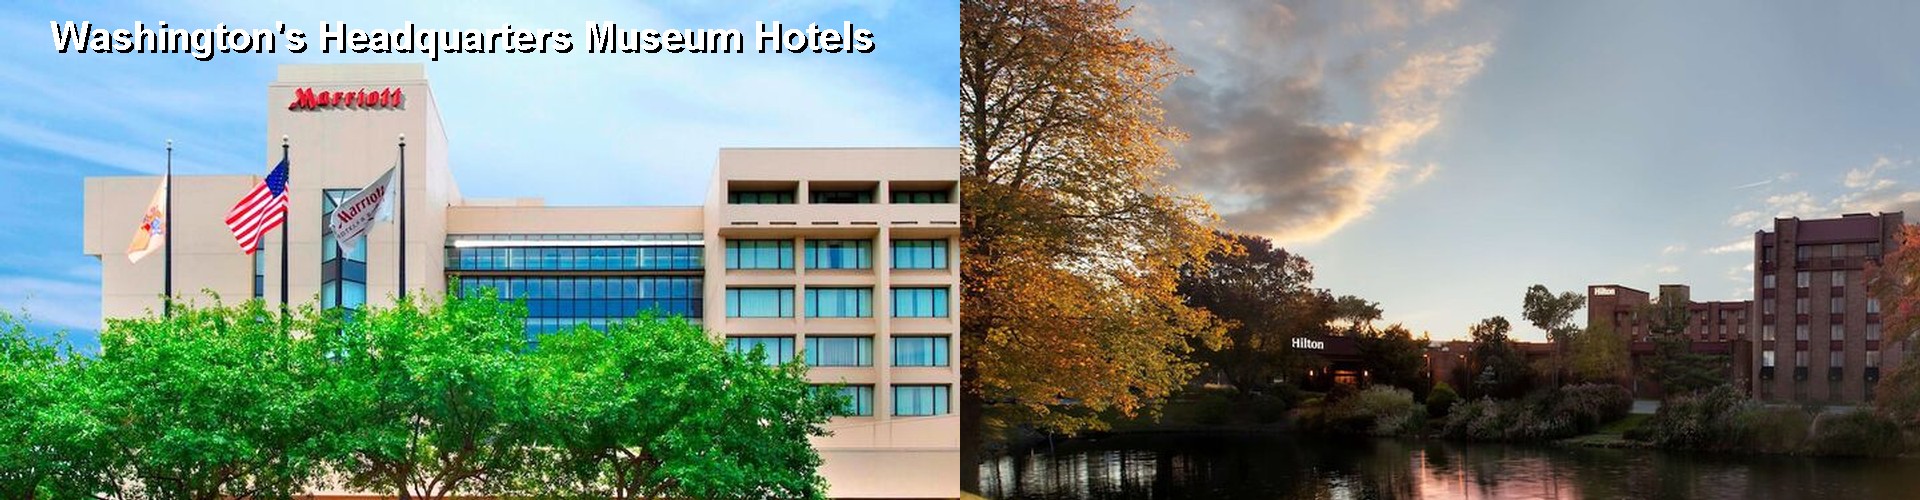 5 Best Hotels near Washington's Headquarters Museum